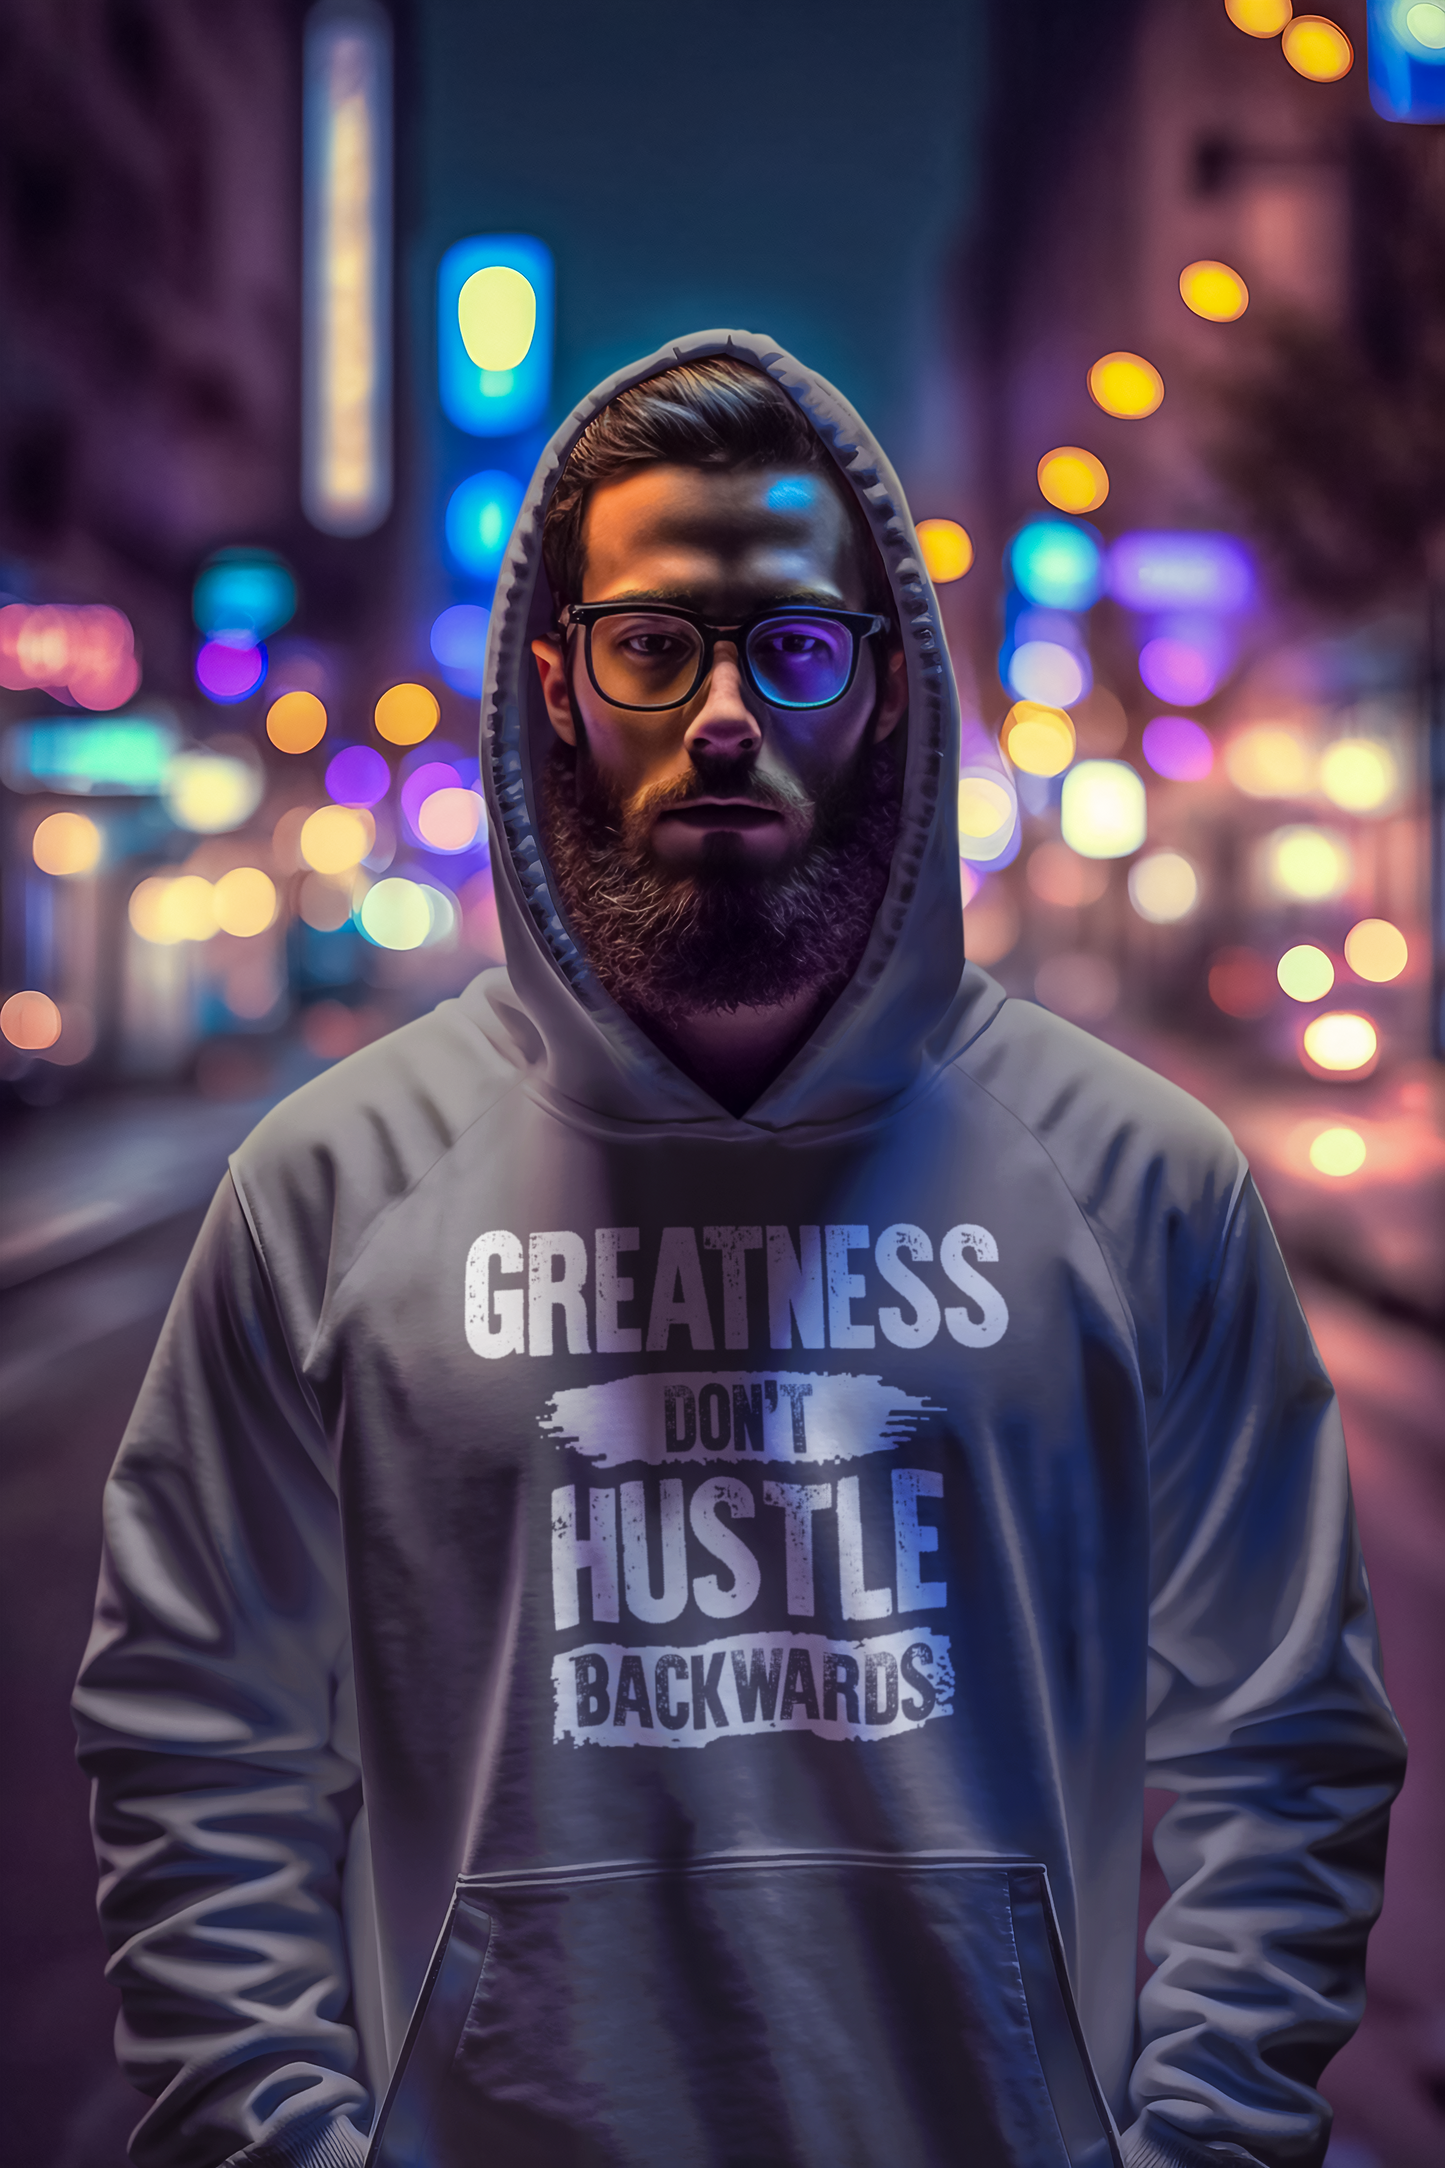 GREATNESS DON'T HUSTLE BACKWARDS -Hooded Sweatshirt